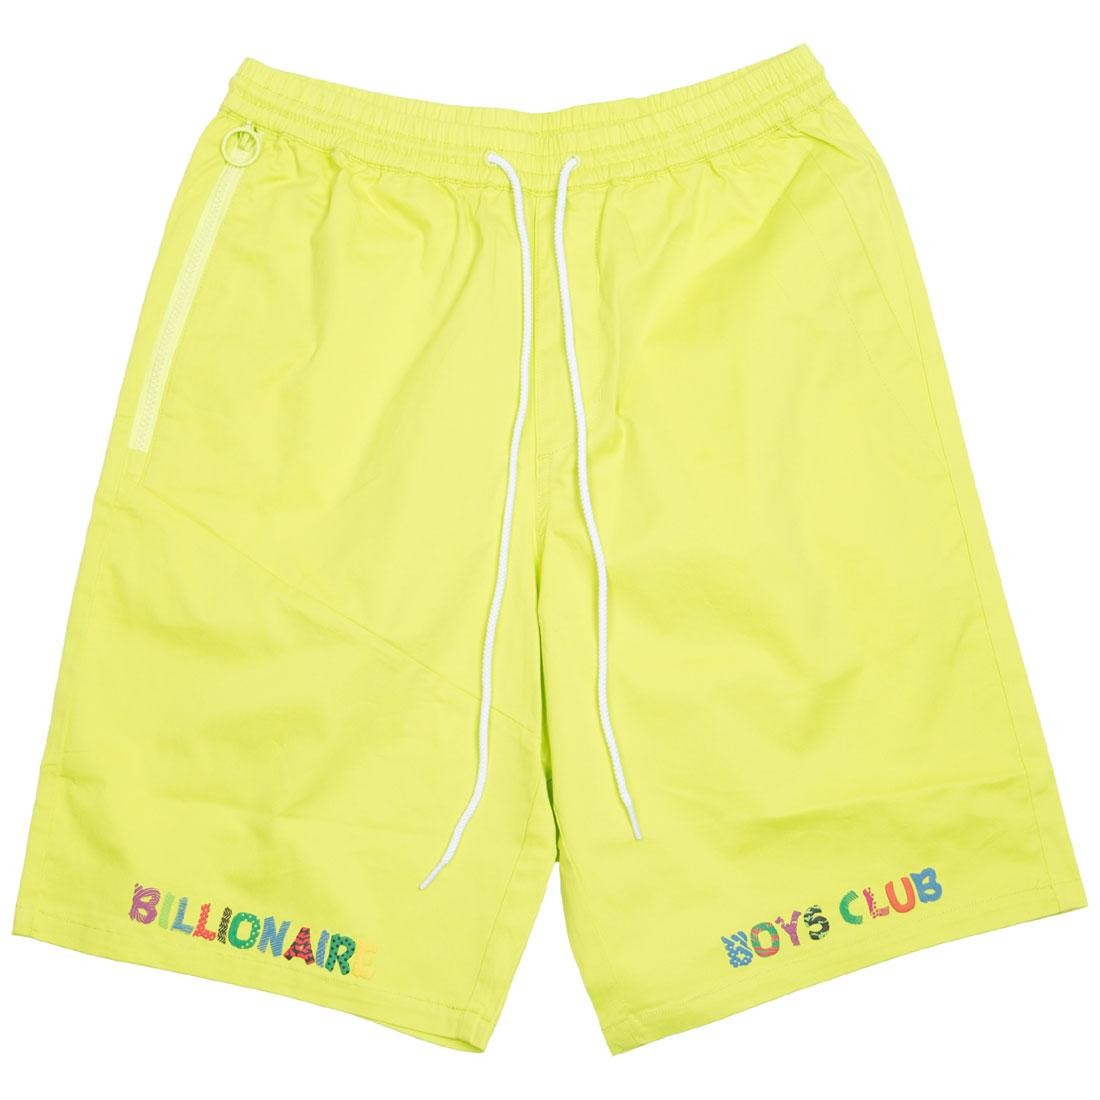 Billionaire Boys Club Men Smiles Shorts (yellow / lime)